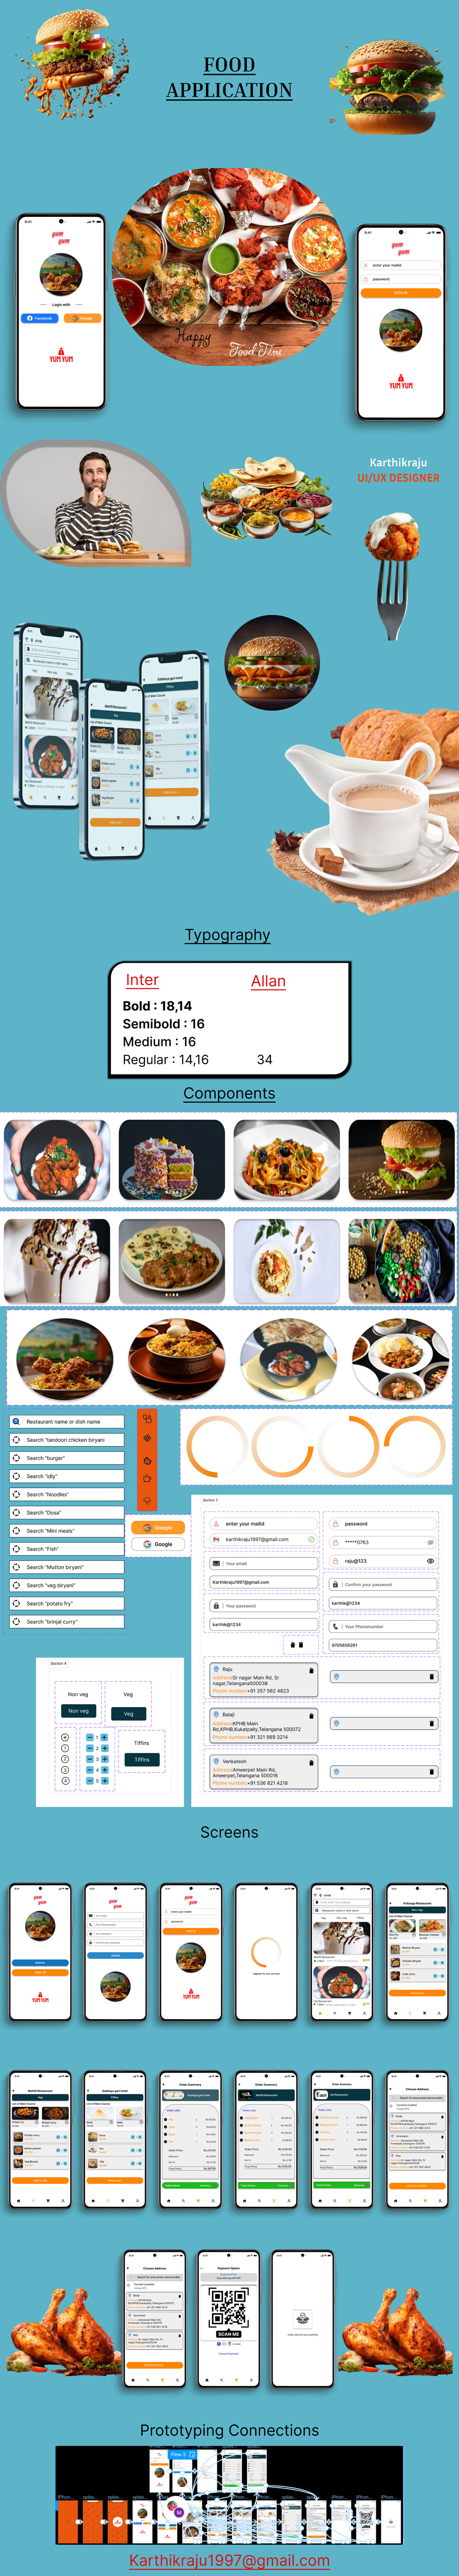 animation  food app Food UI Design restaurant visual identity Social media post brand identity Advertising  marketing   Brand Design